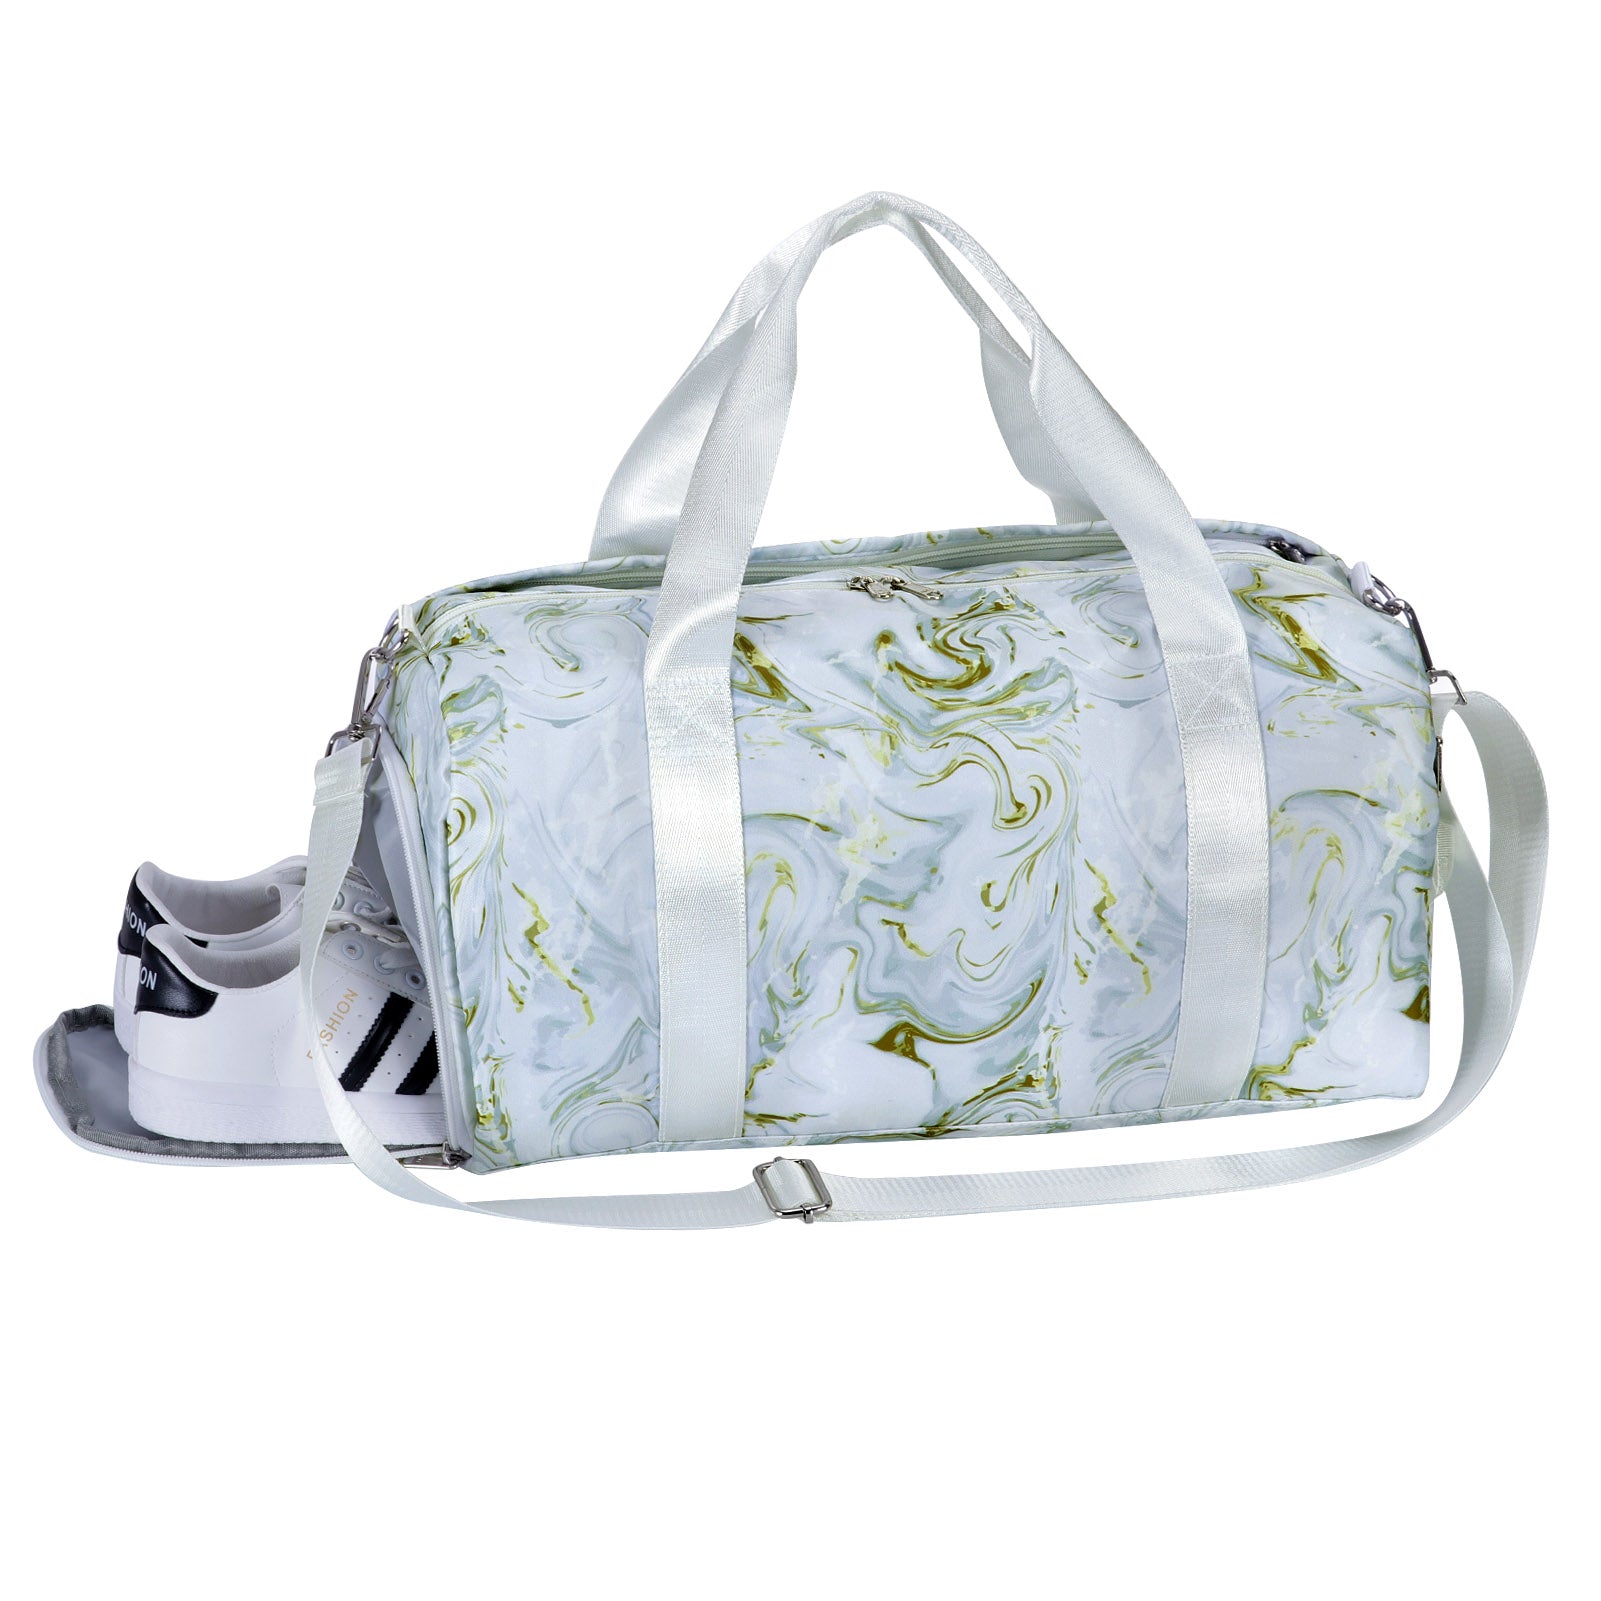 KAMO Gym Bag for Women, Sport Duffle Bag with Shoe Compartment & Wet Pocket, Weekender Overnight Bag Compartment for Women Girls Travel, Gym, Yoga, School - KAMO